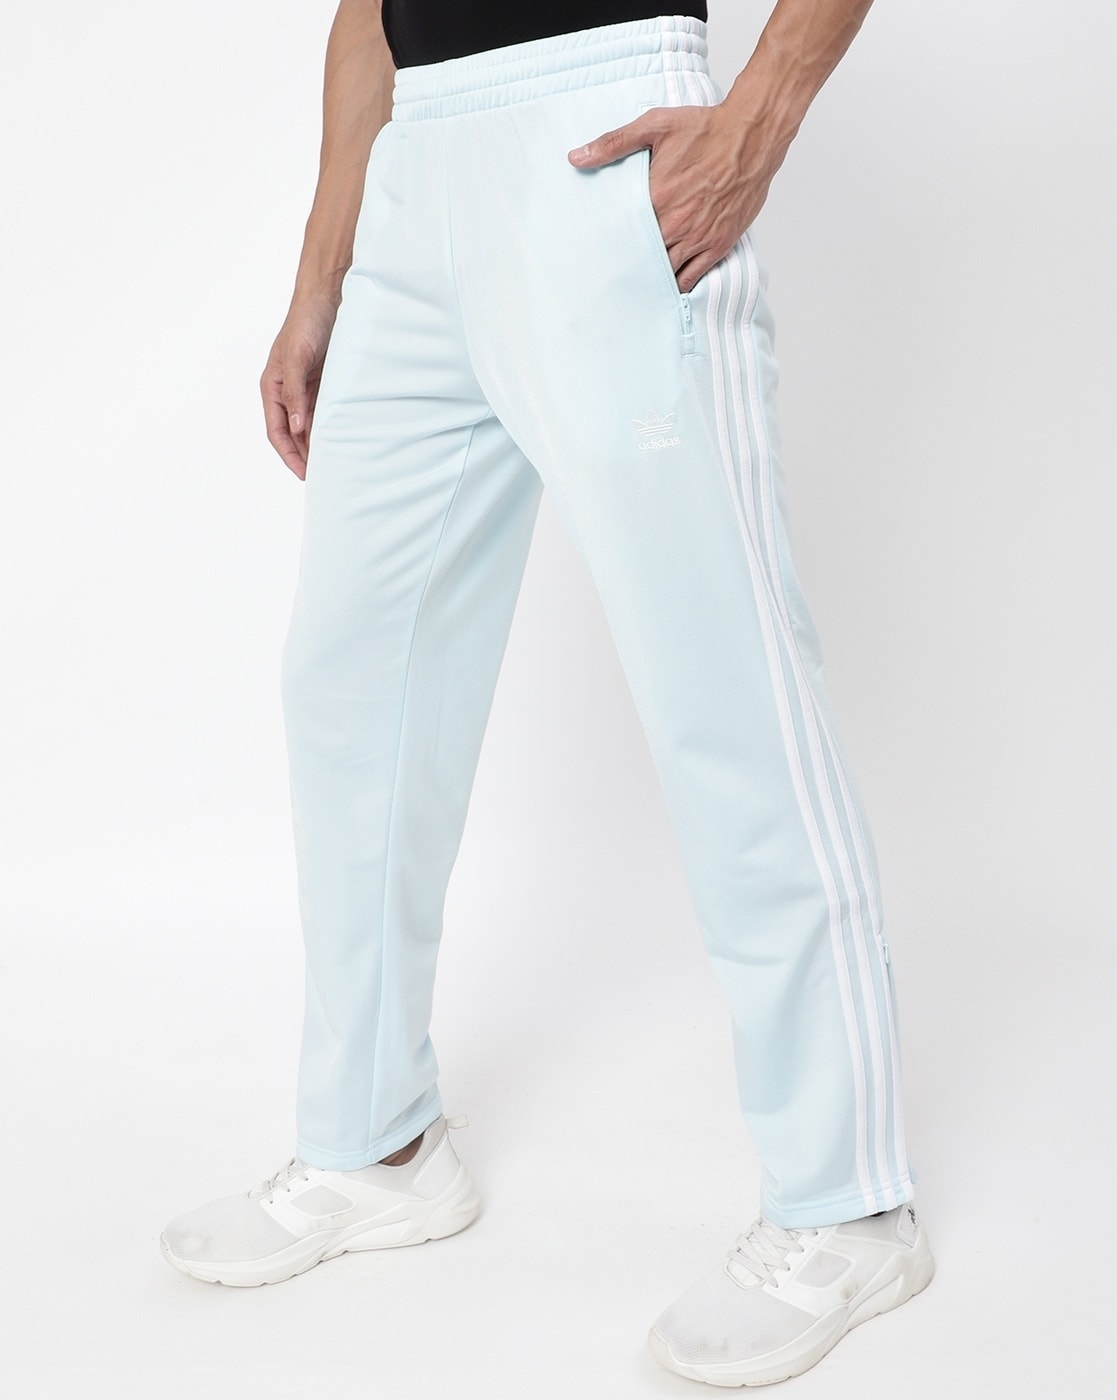 Light Blue Solid Track Pants - Selling Fast at Pantaloons.com